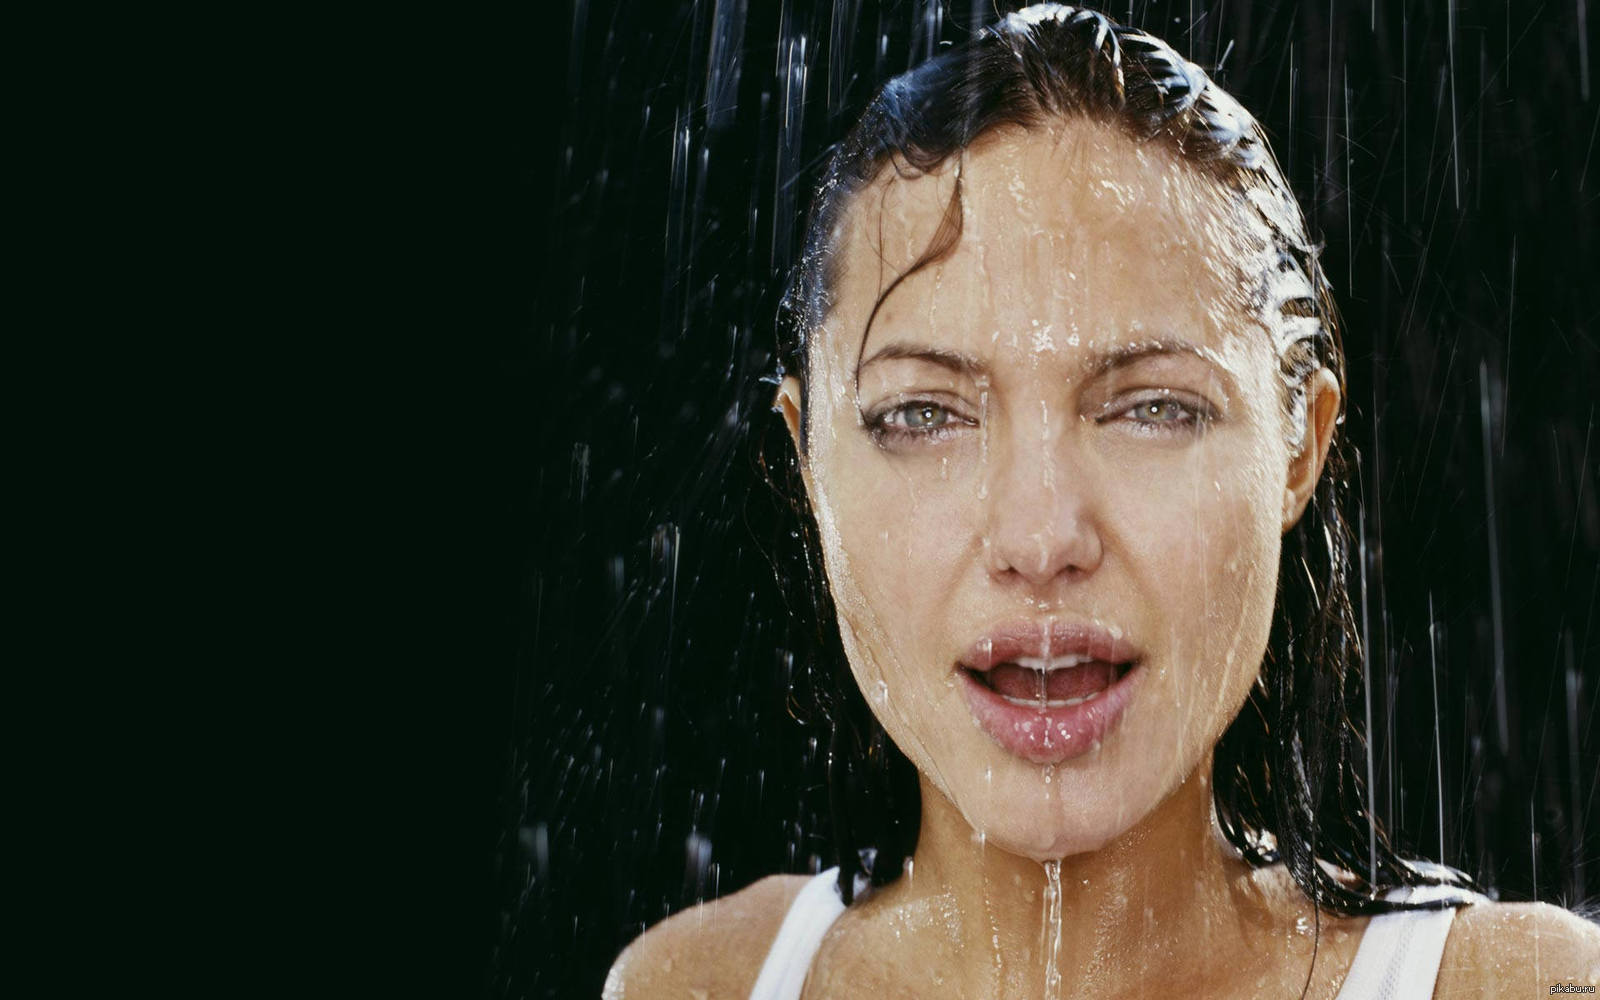 Мокрые сестренки. Анджелина Джоли мокрая. Анджелина Джоли мокрые волосы. Анджелина Джоли моется. Мокрое лицо девушки.